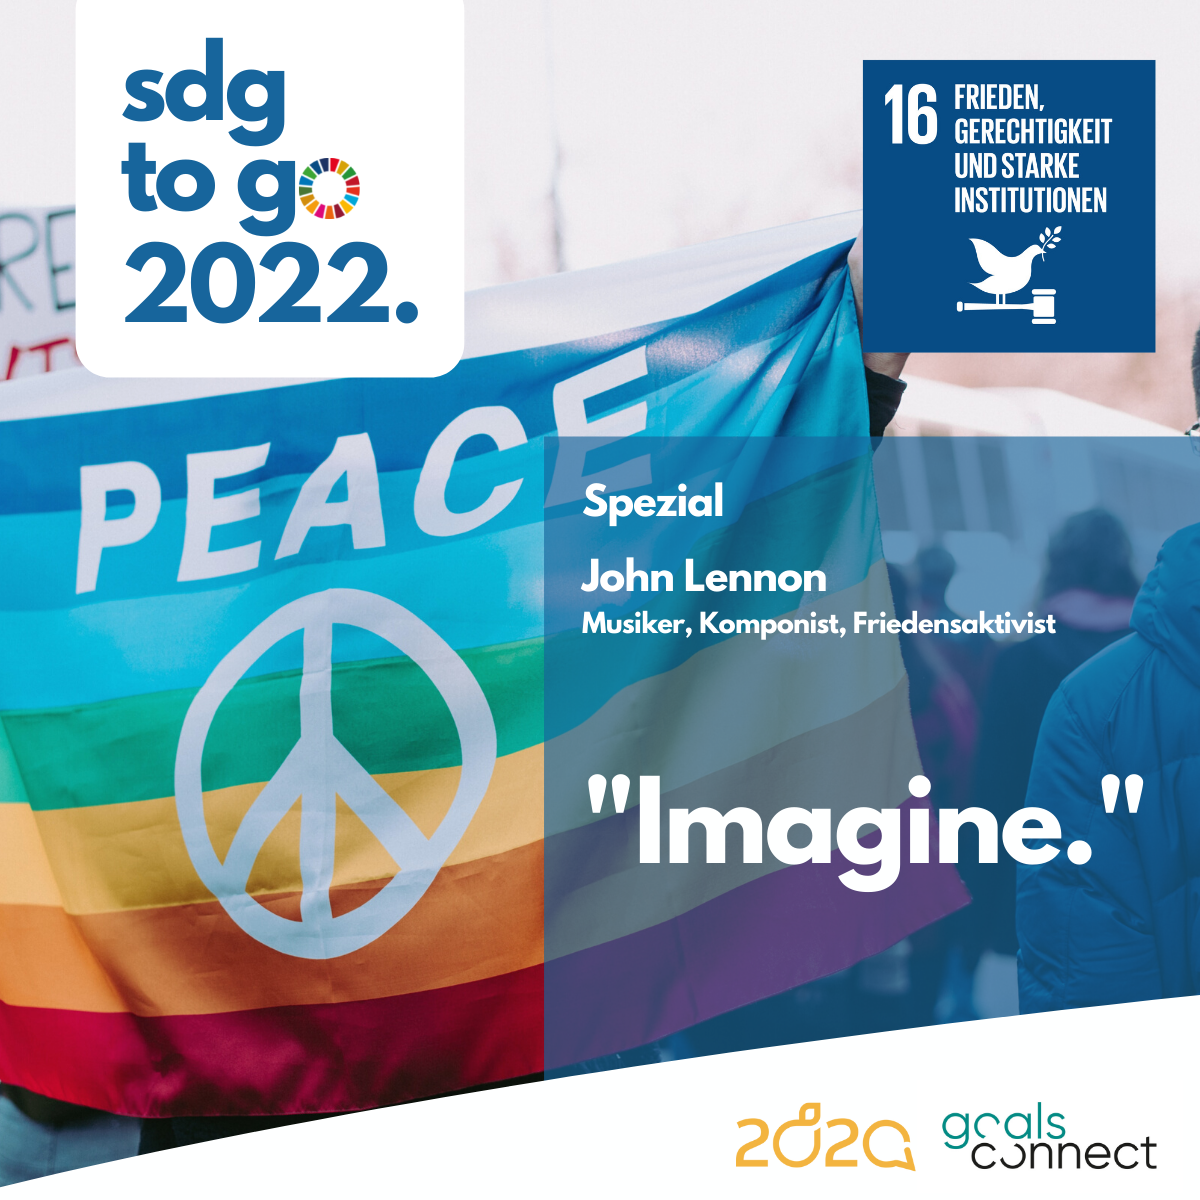 SDG to go – Heute: SPEZIAL zu SDG 16